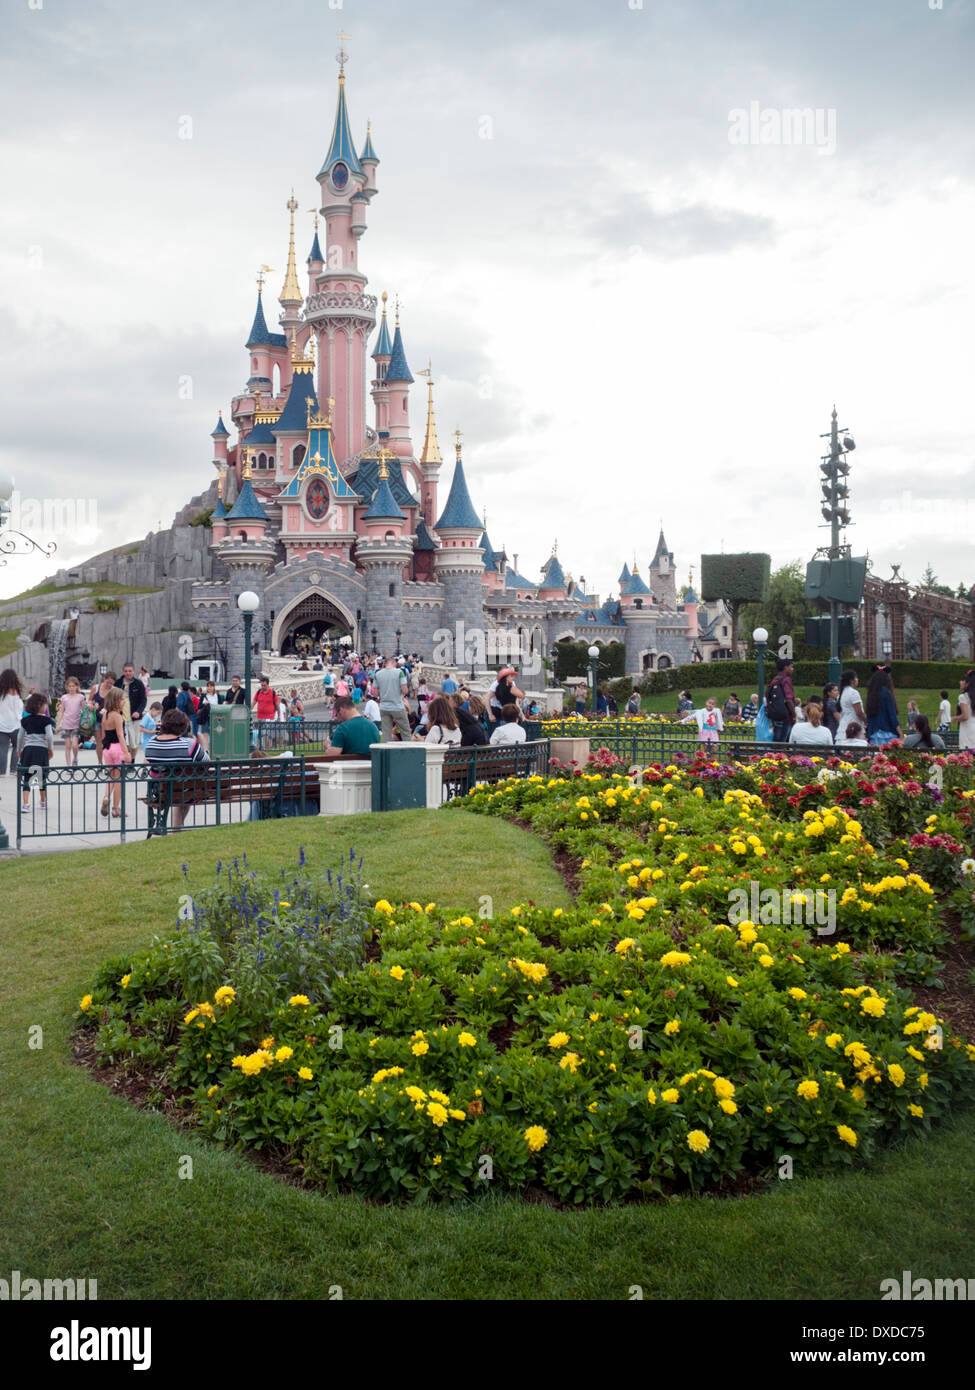 Disney Castle at Disneyland Paris, France Stock Photo